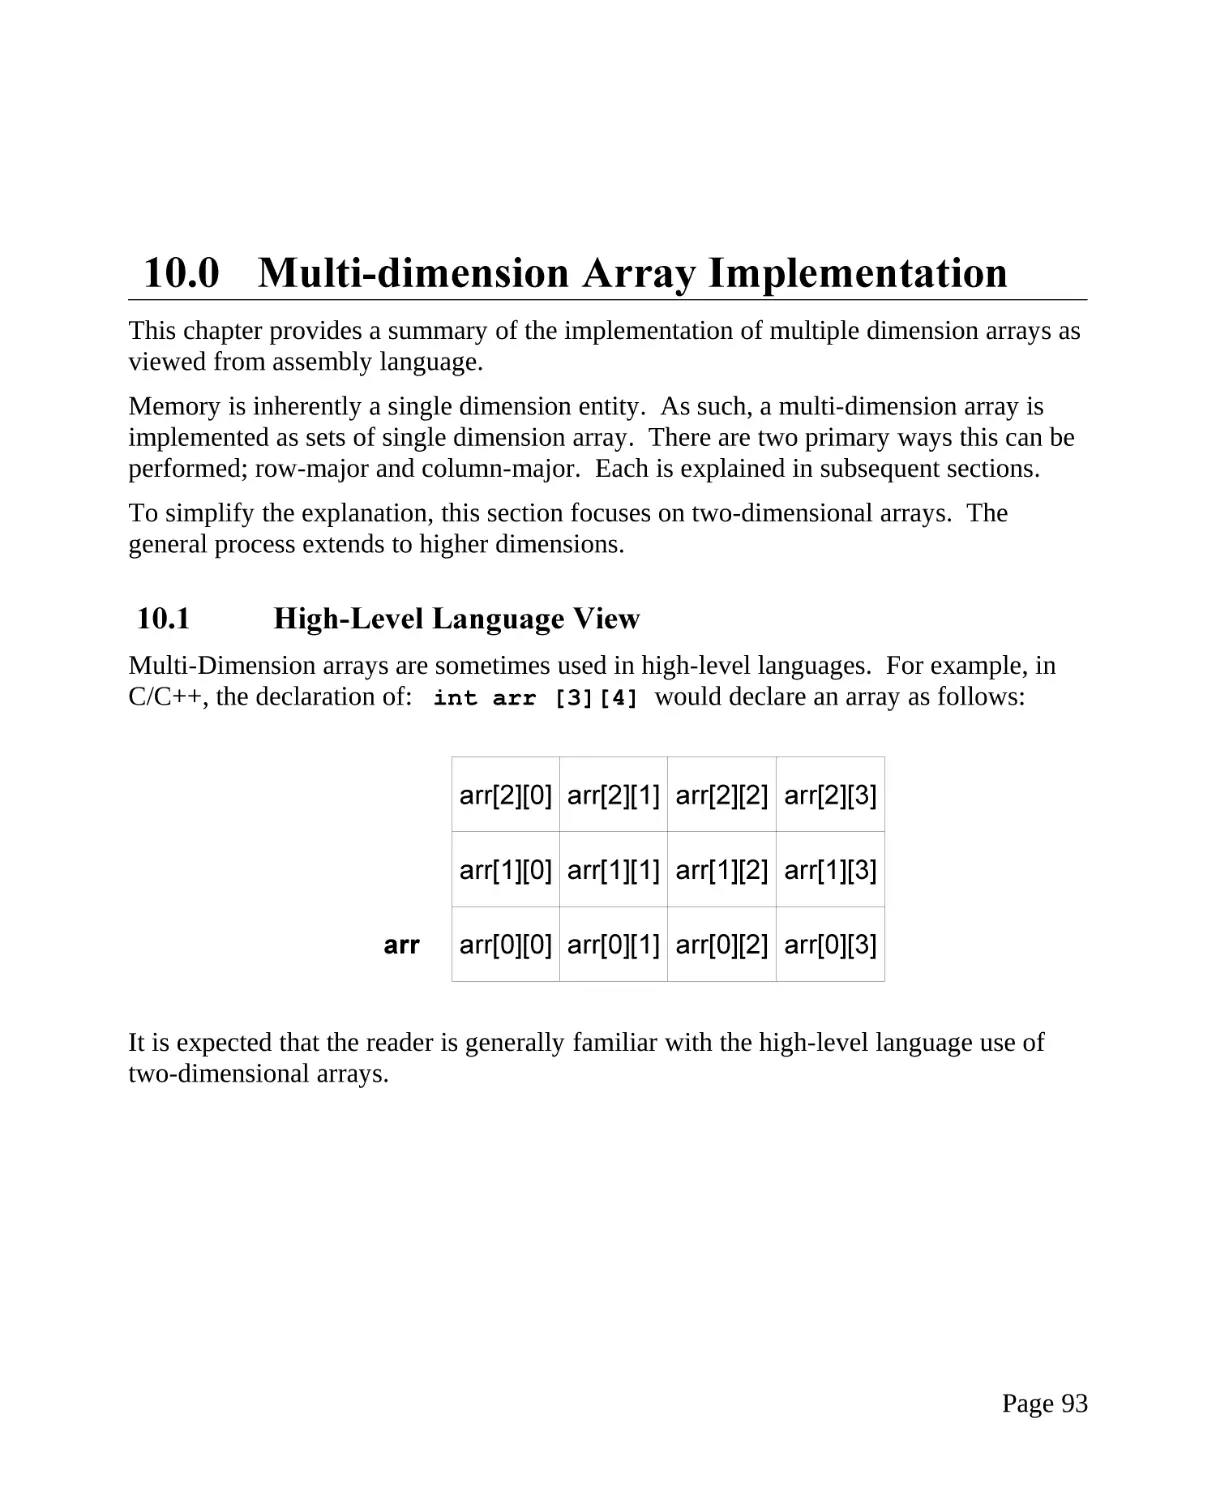 10.0 Multi-dimension Array Implementation
10.1 High-Level Language View